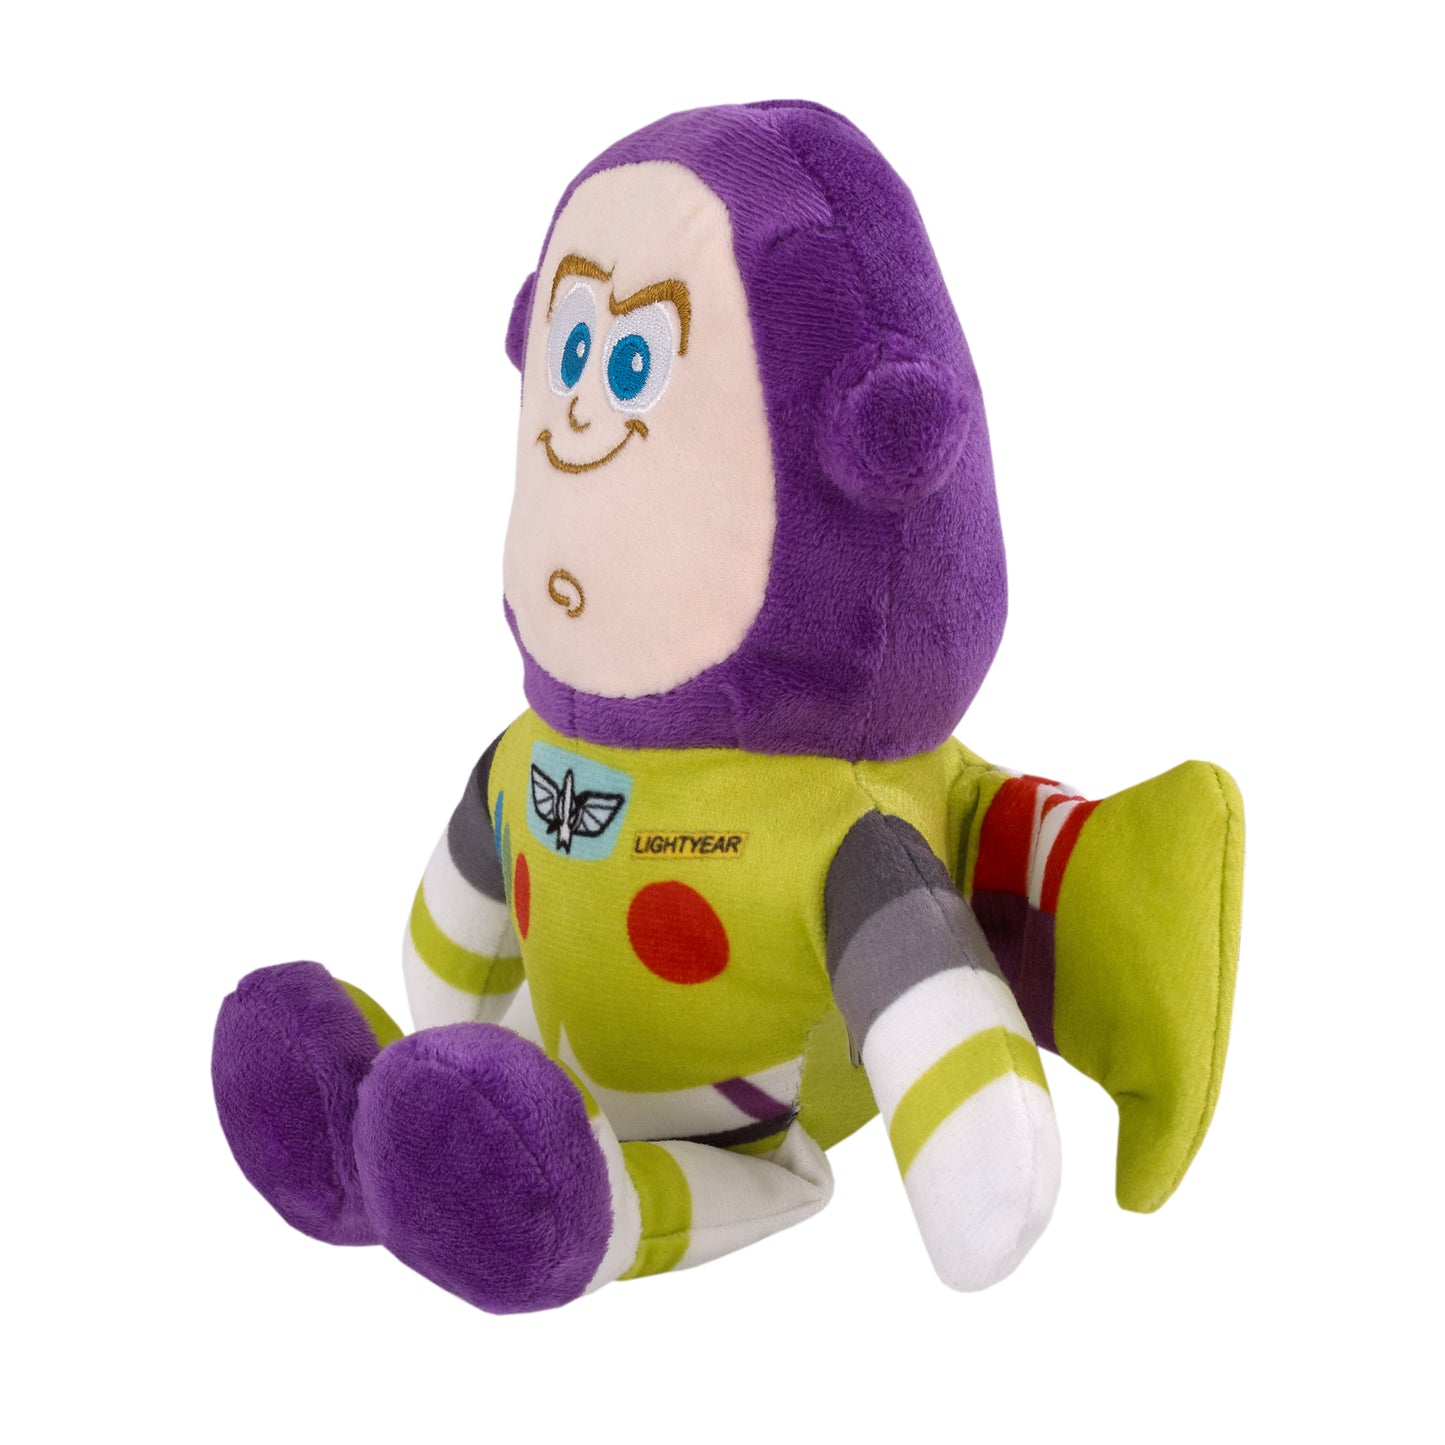 Disney Toy Story Buzz Lightyear Light Up Plush Character